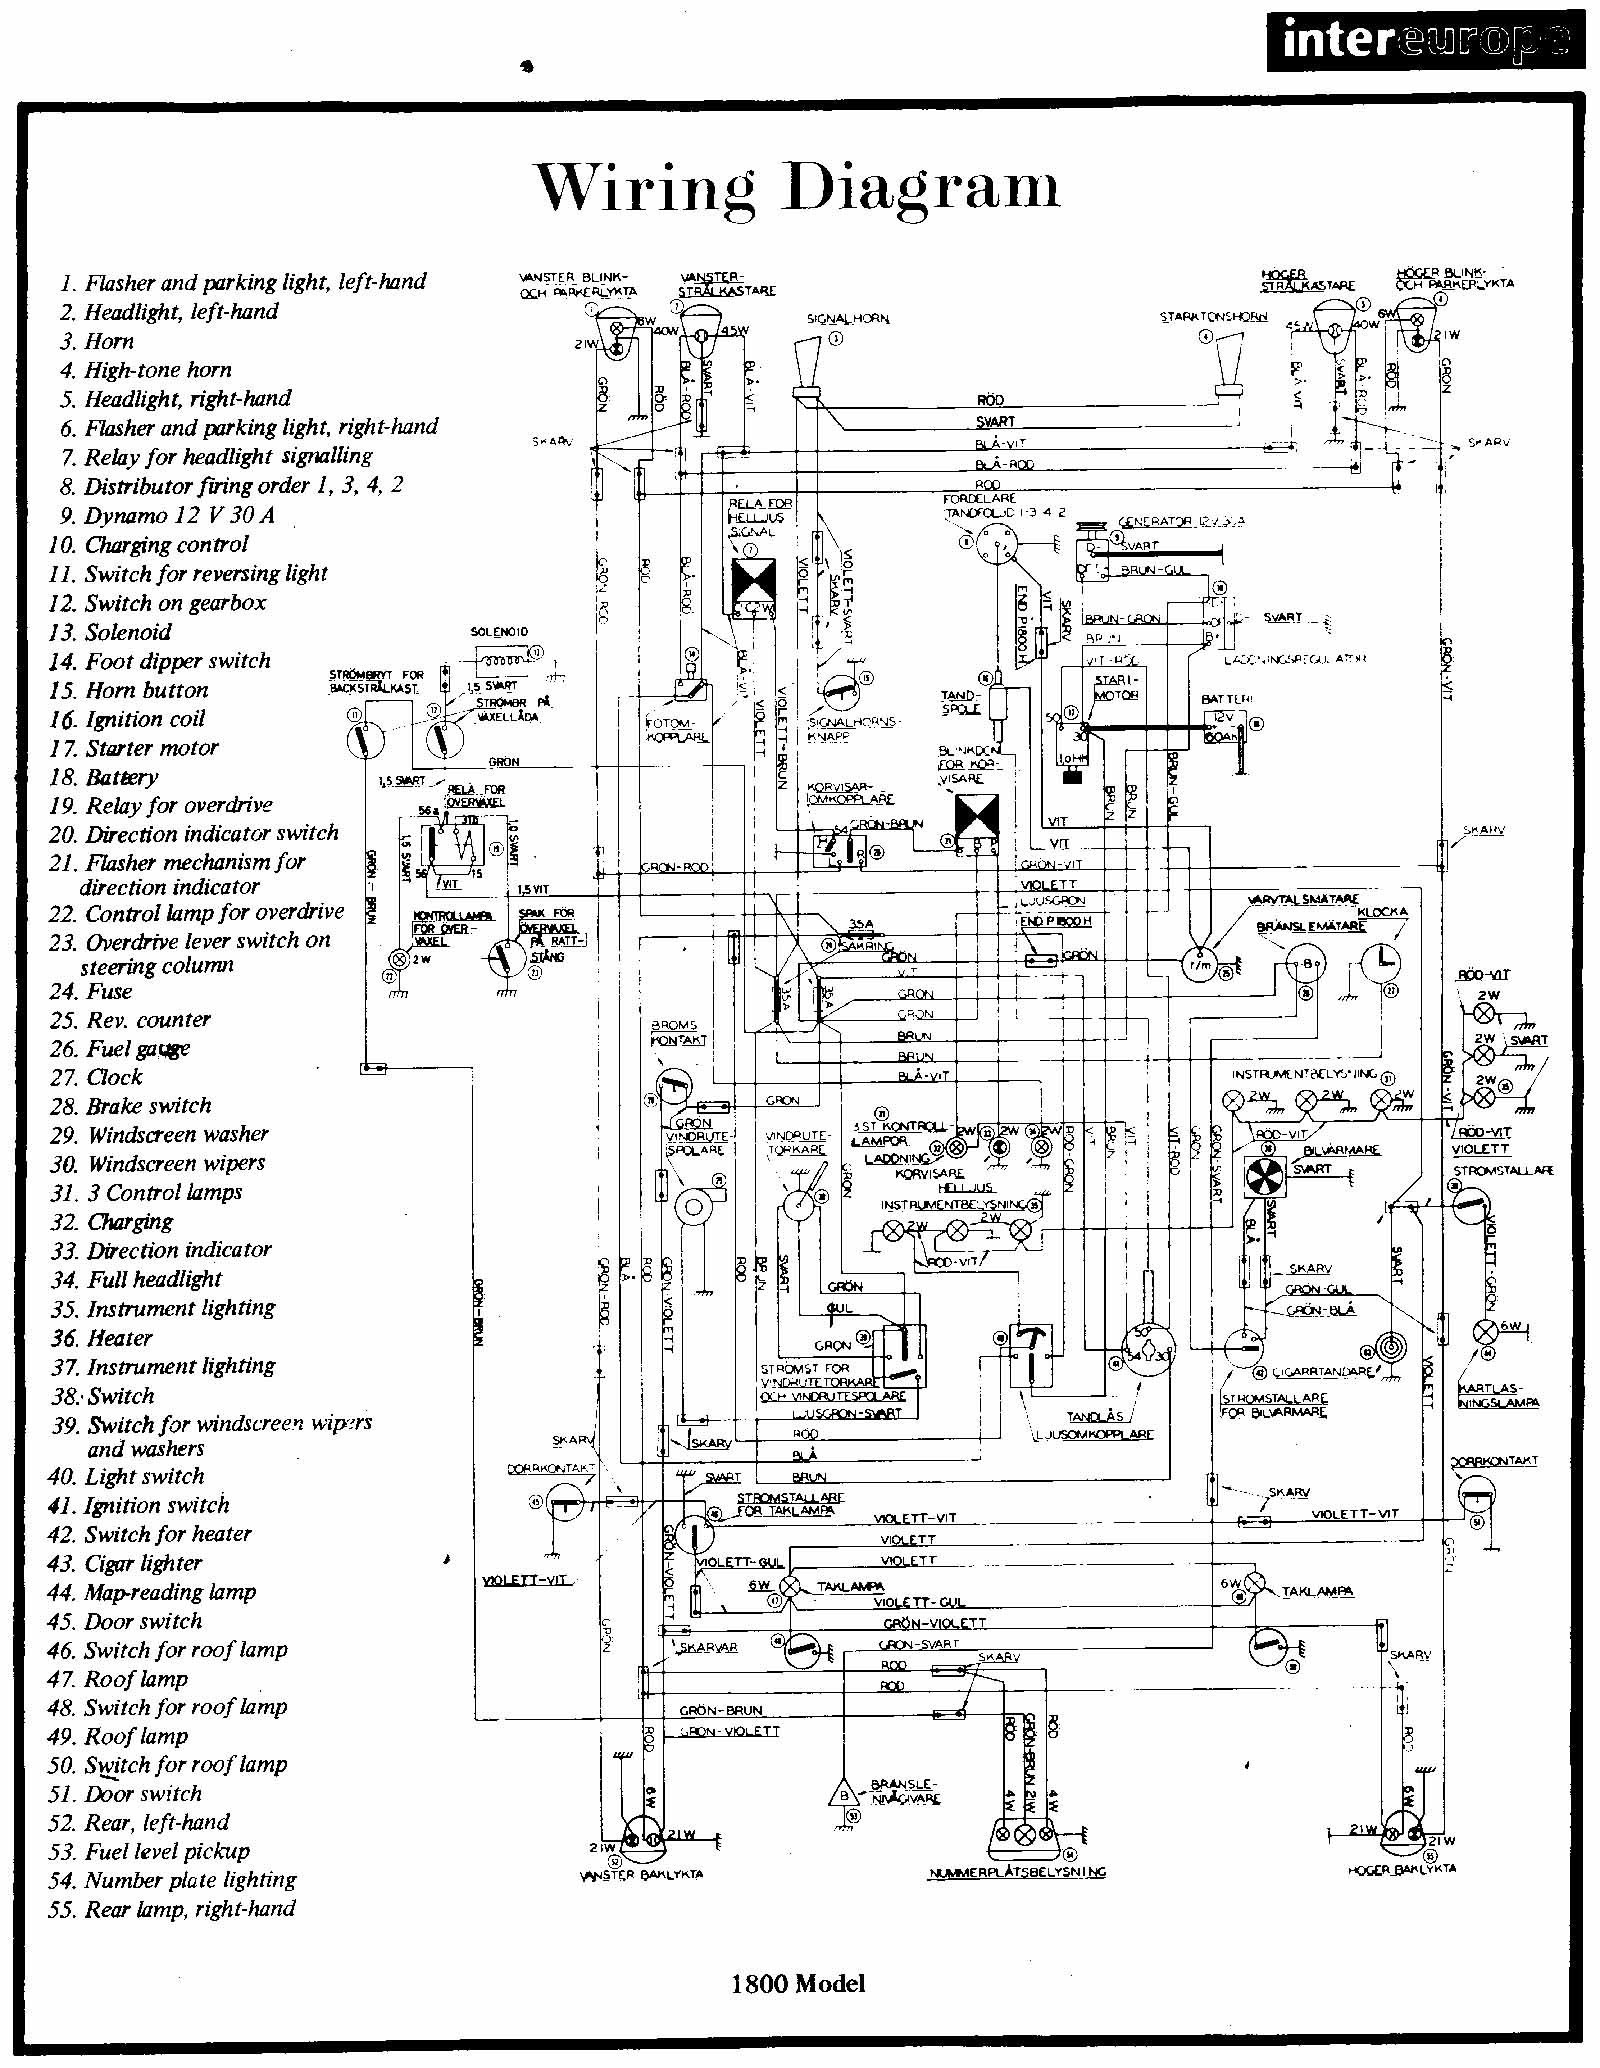 Wiring Diagram For Kohler Engine Refrence 2000 Volvo S80 Engine